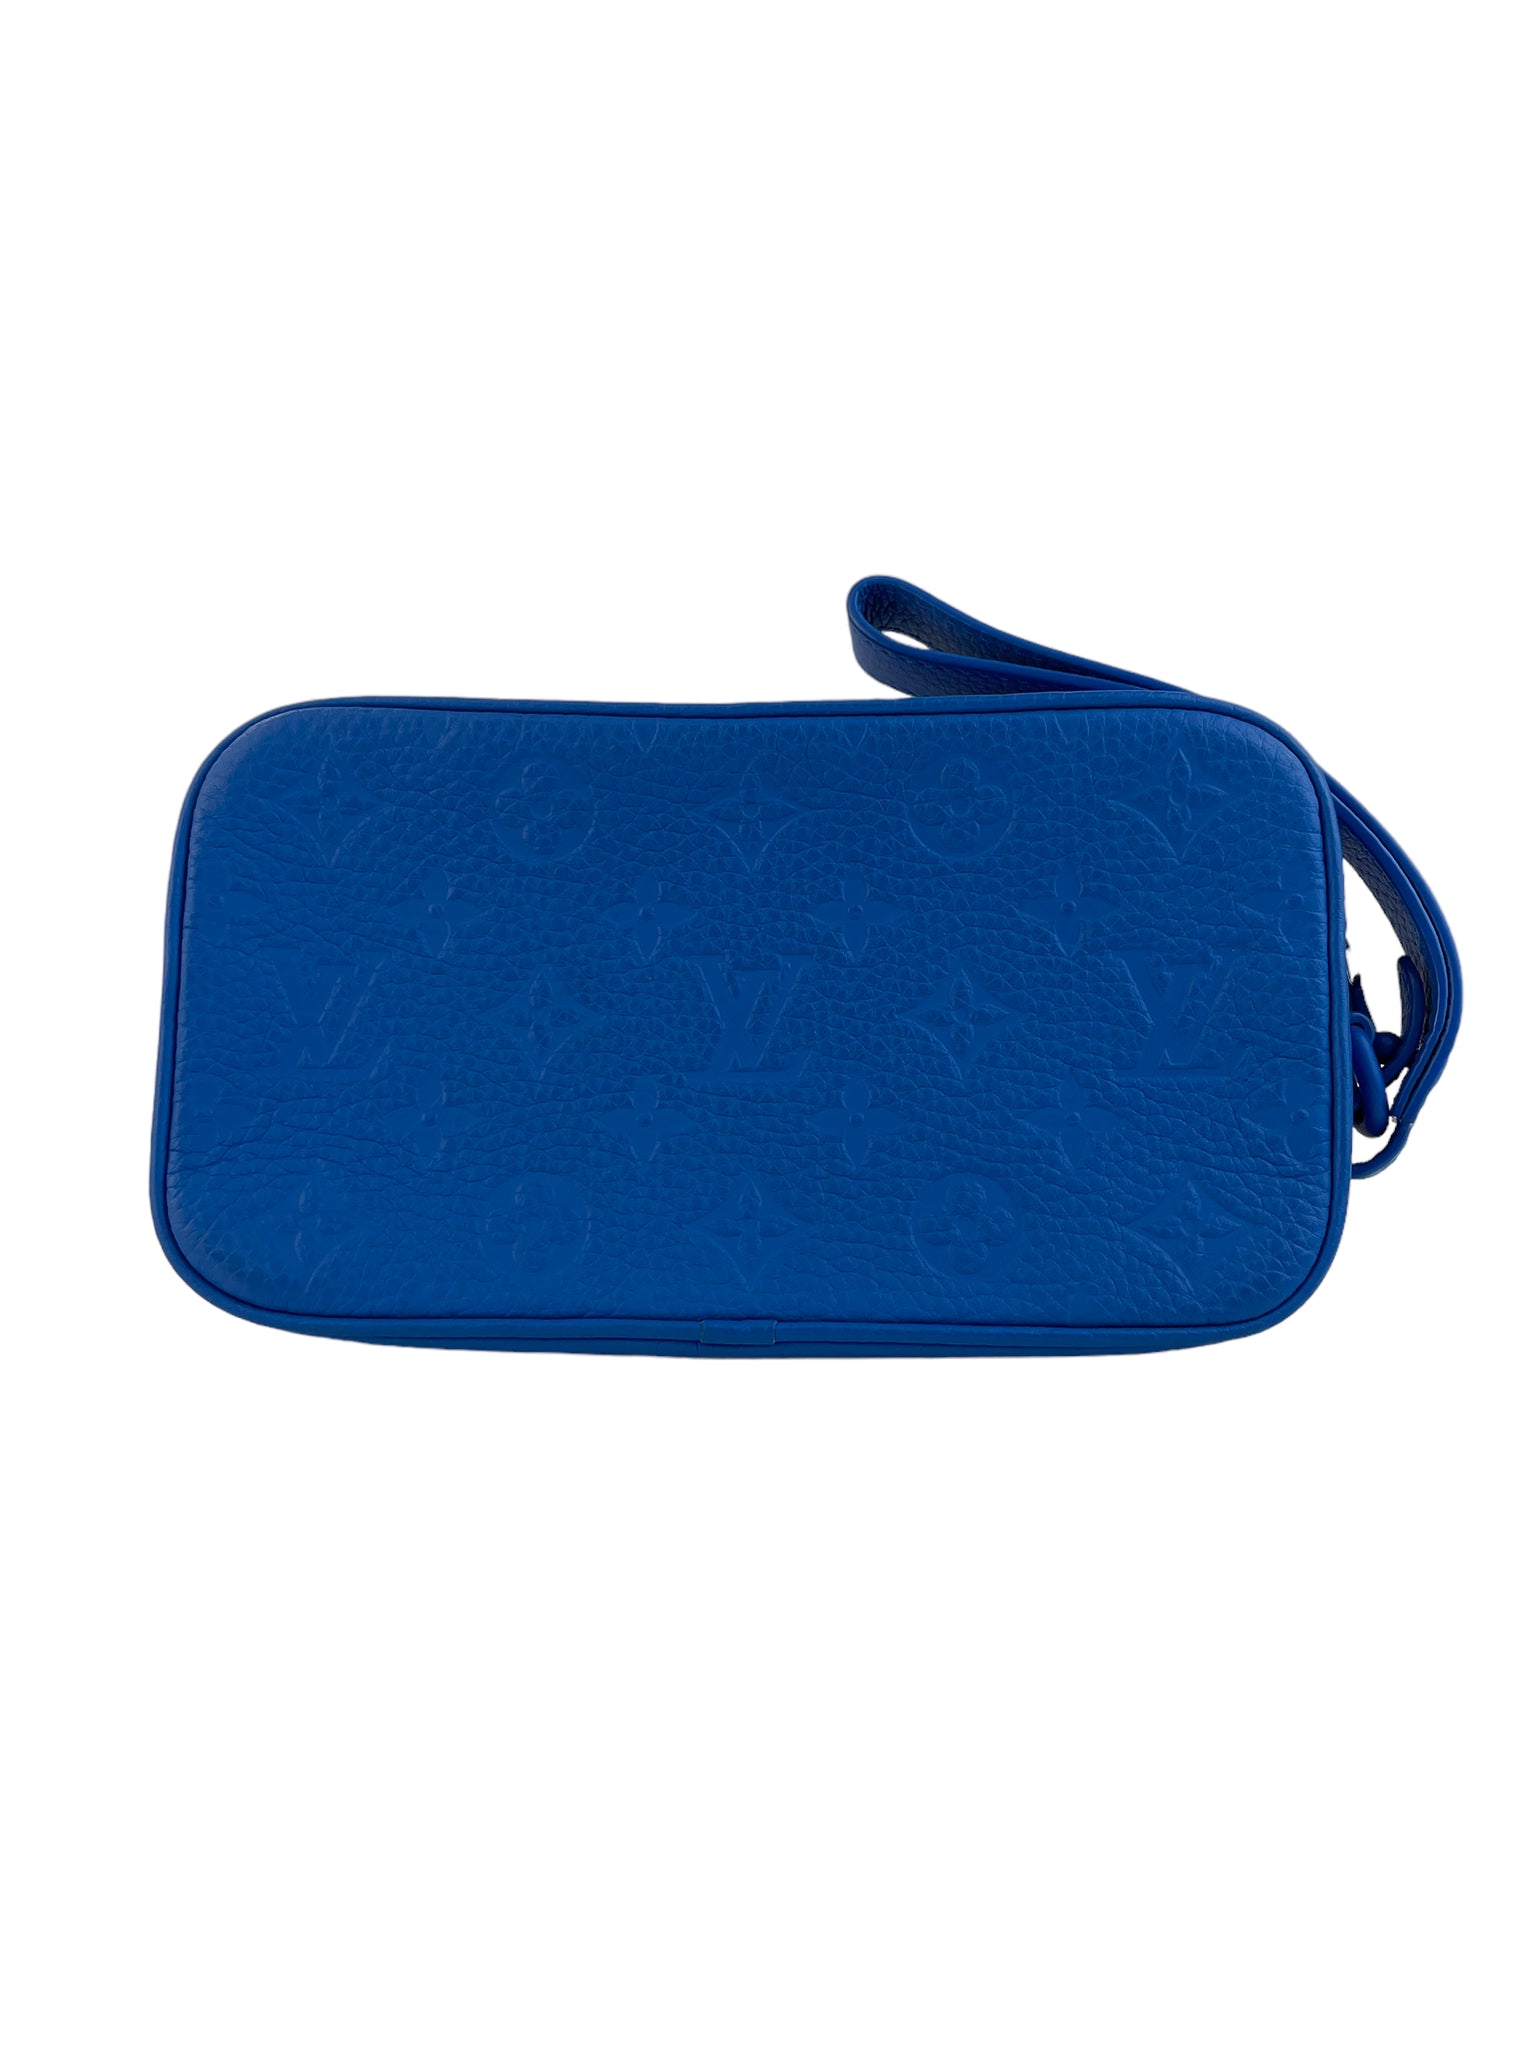 Louis Vuitton Pochette Volga Monogram Blue in Taurillon Leather